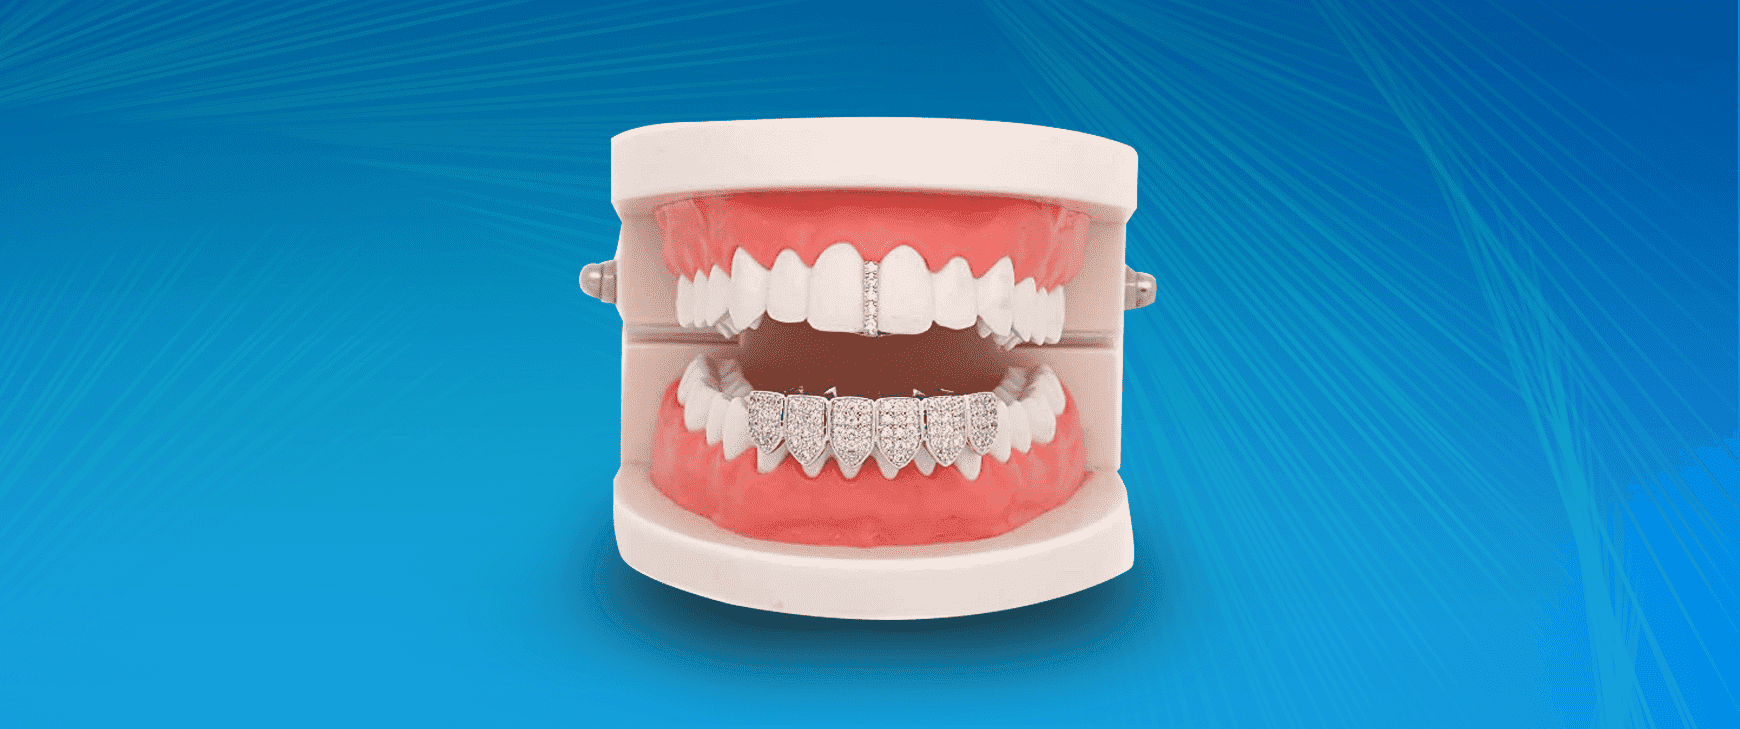 Grillz dentales - Clínica Dental